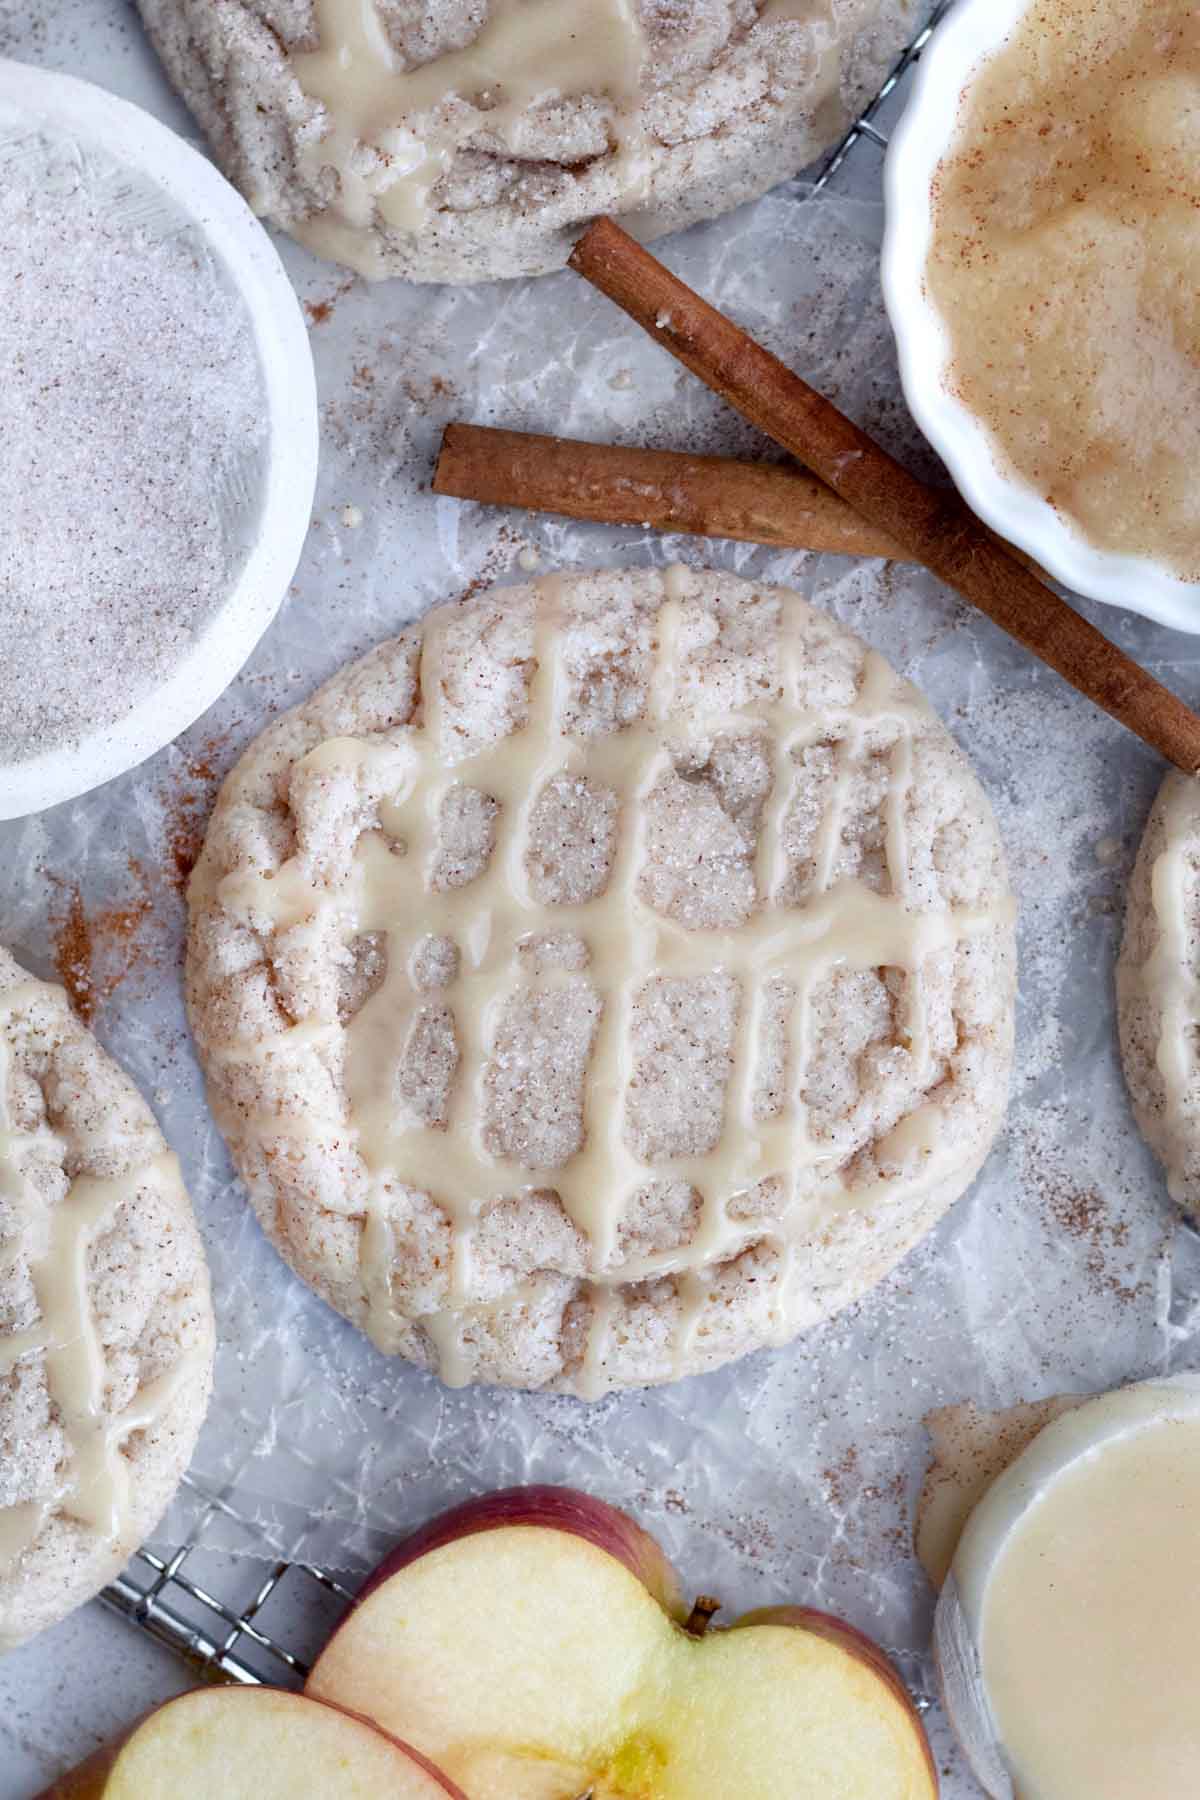 Sugary glaze crosshatched on an Apple Cinnamon Cookie.